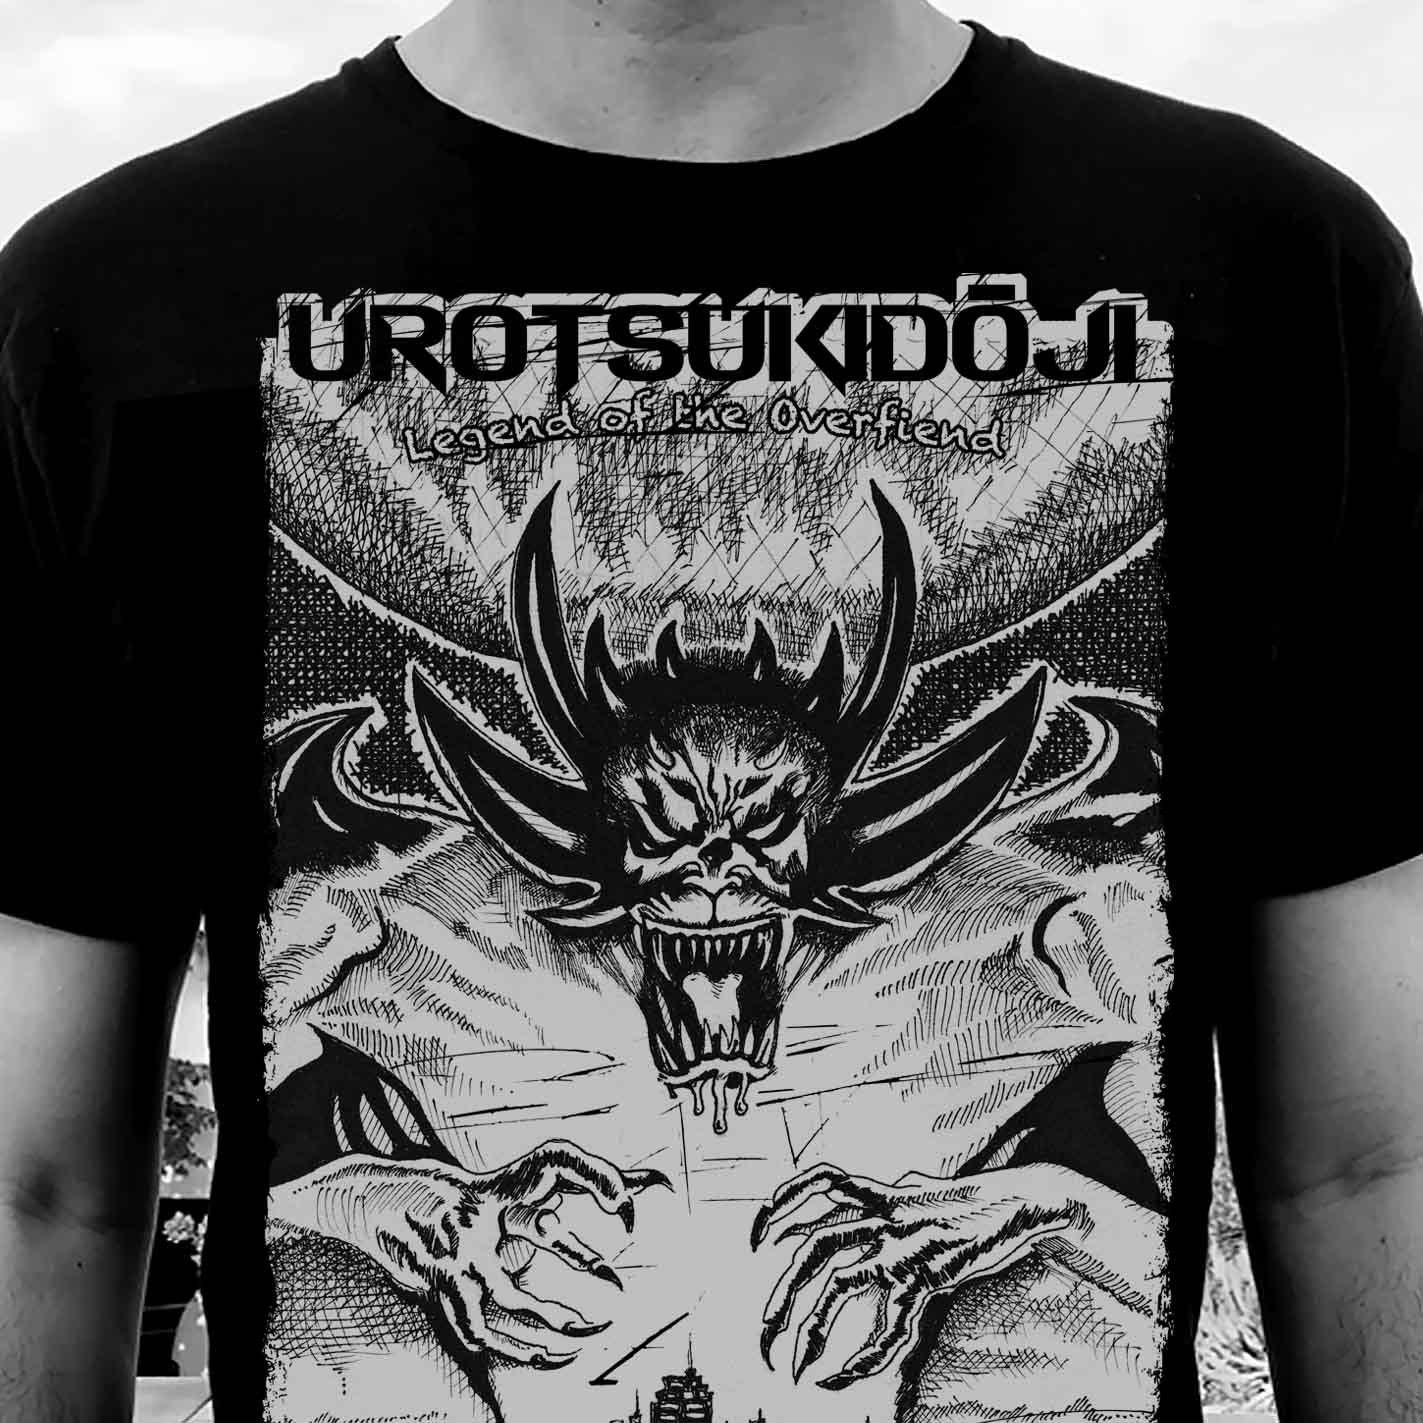 Camiseta de Urotsukidoji: the legend of the avenfiend.